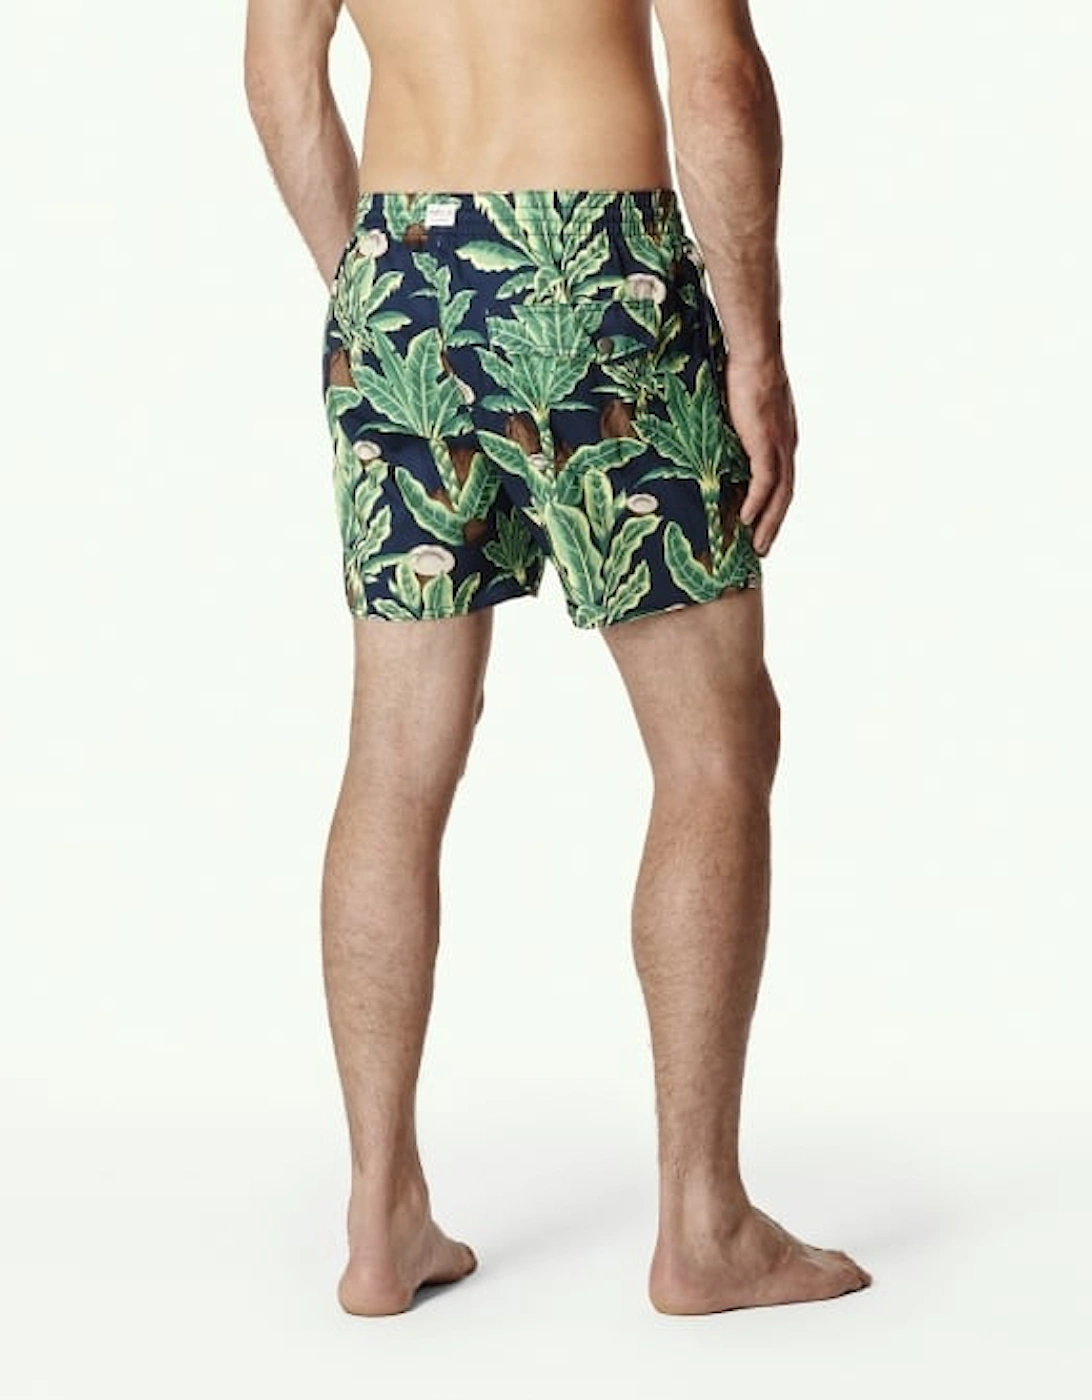 Venturer Coconut Trees Print Swim Shorts, Green/Blue